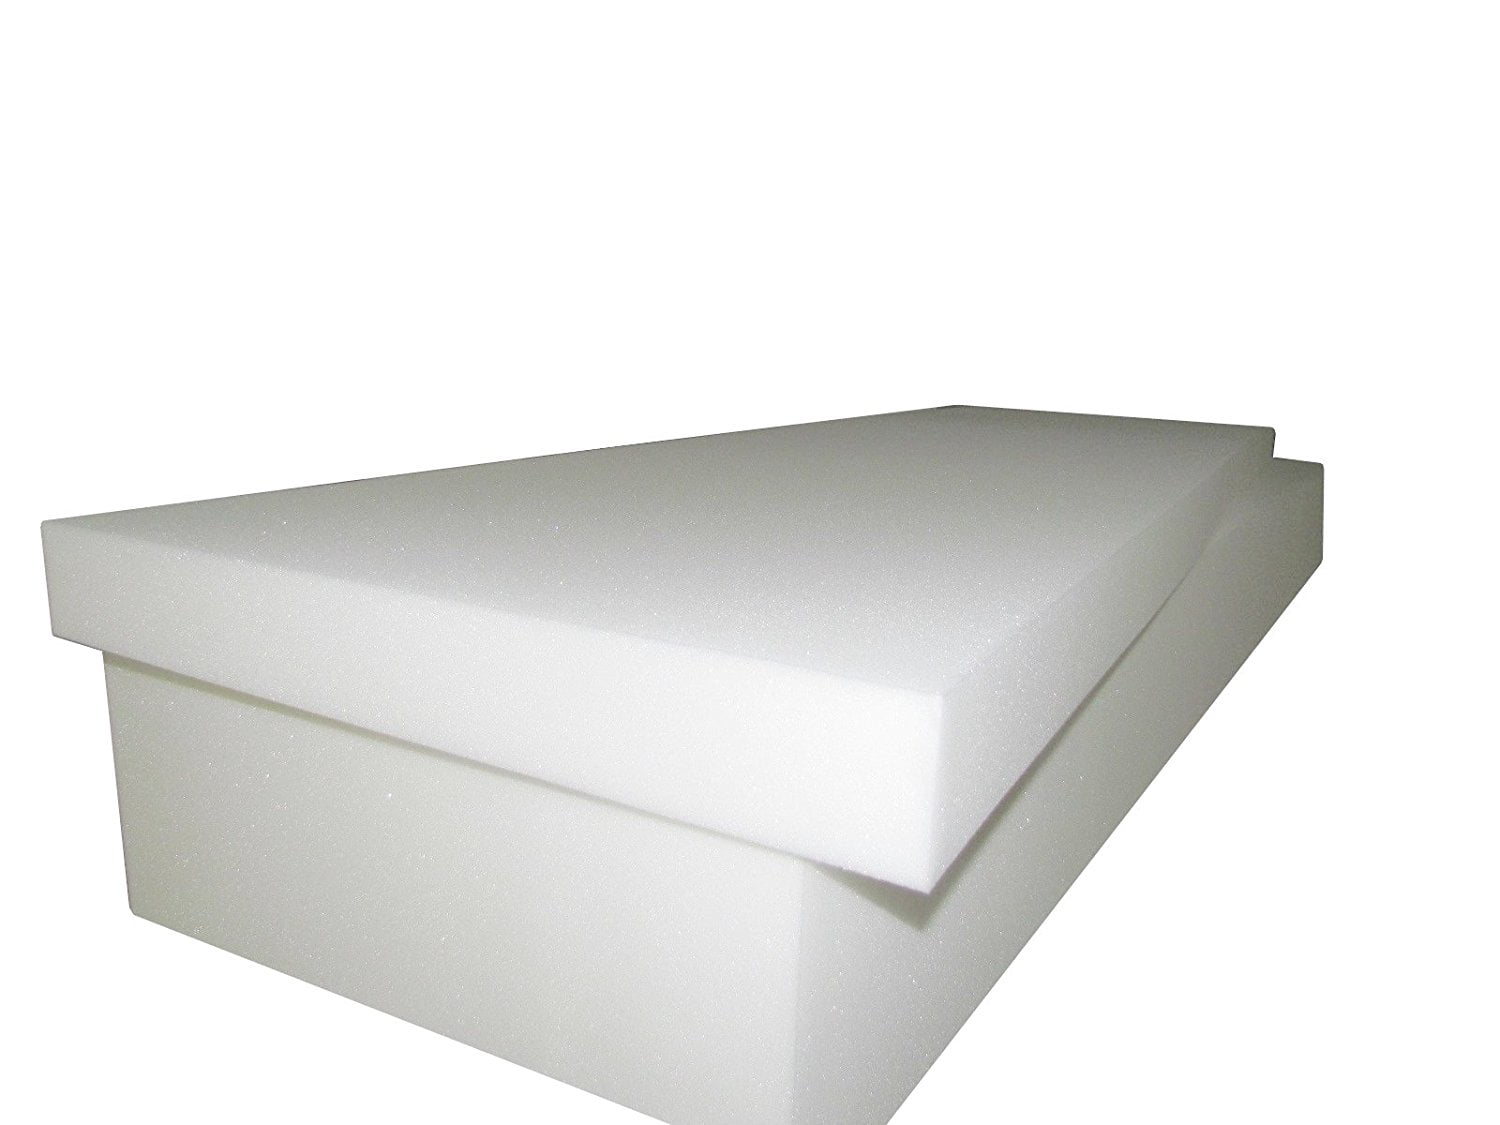 foam cushion for mattress